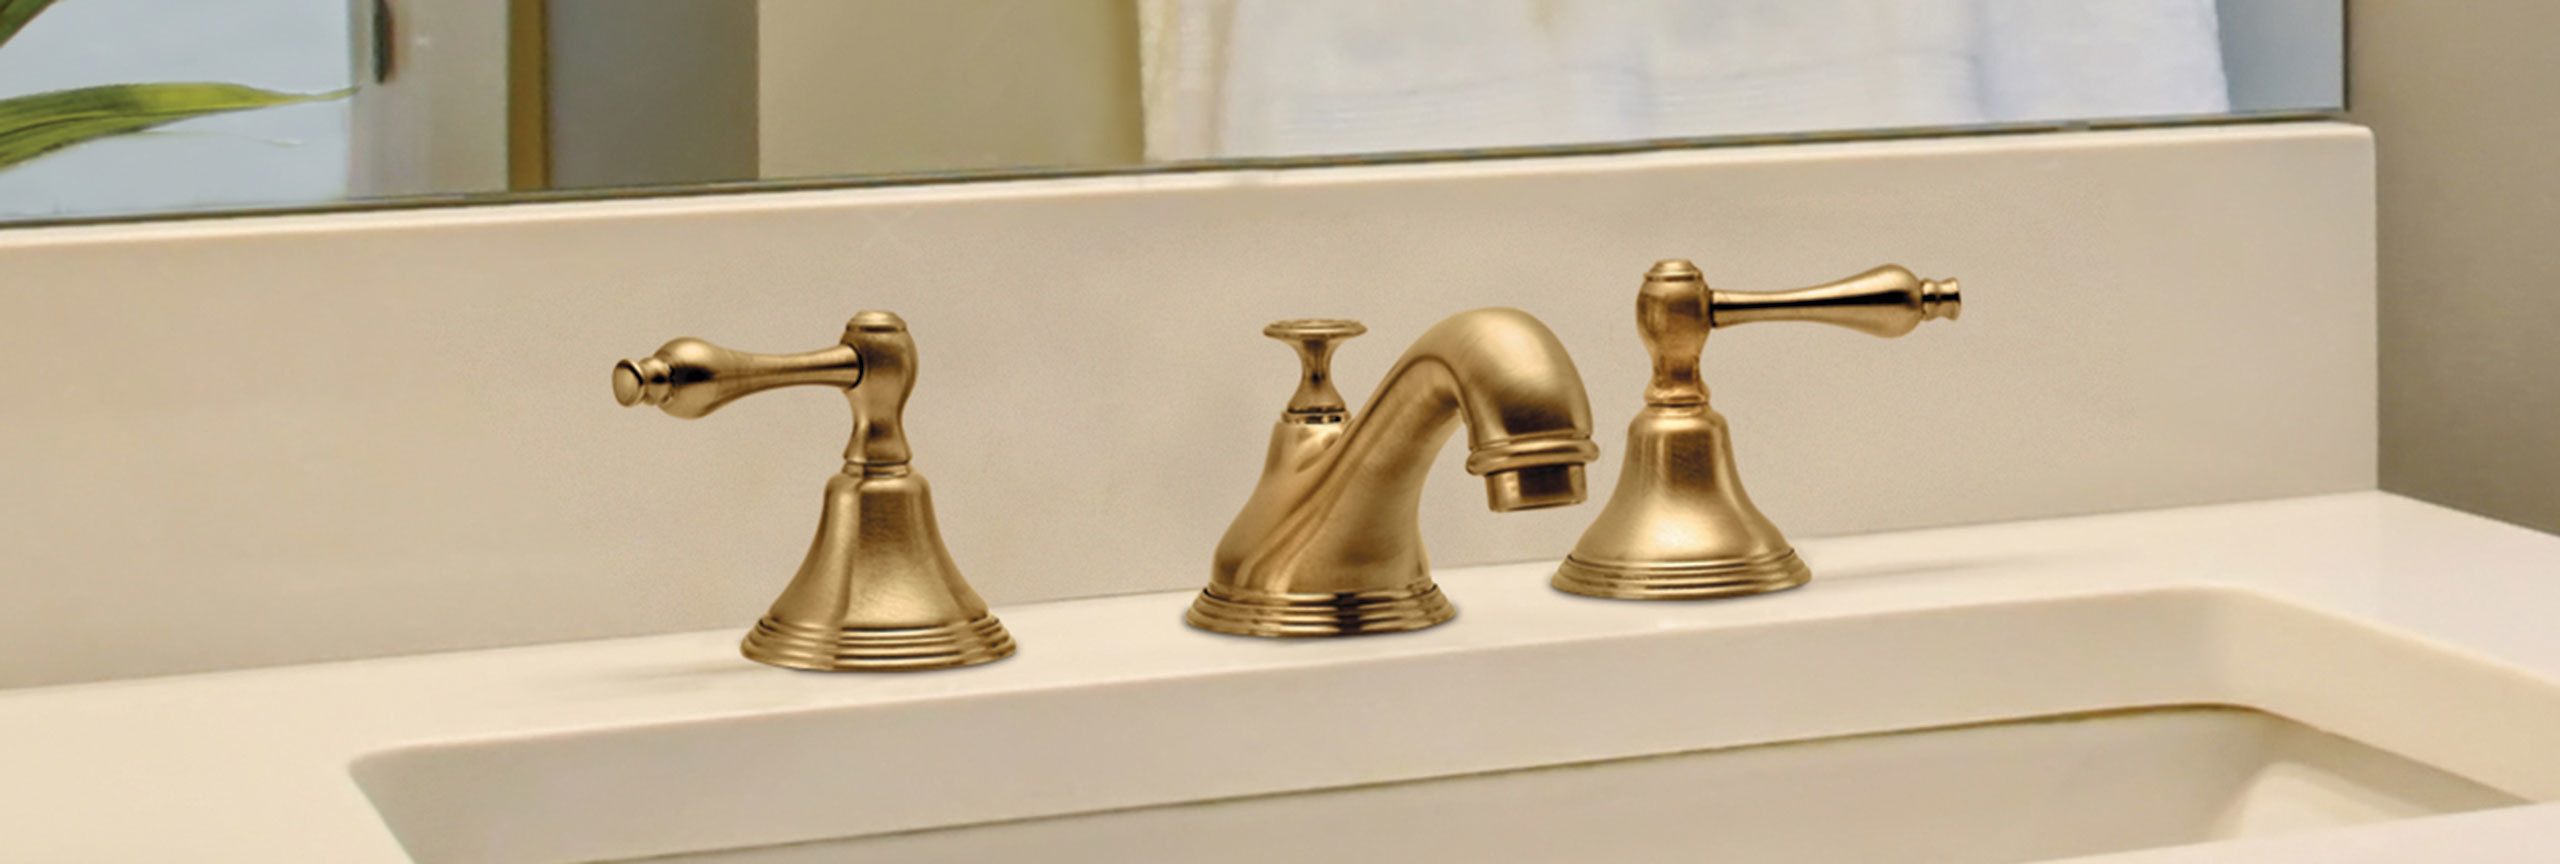 Bathroom series huntington widespread faucet in satin brass